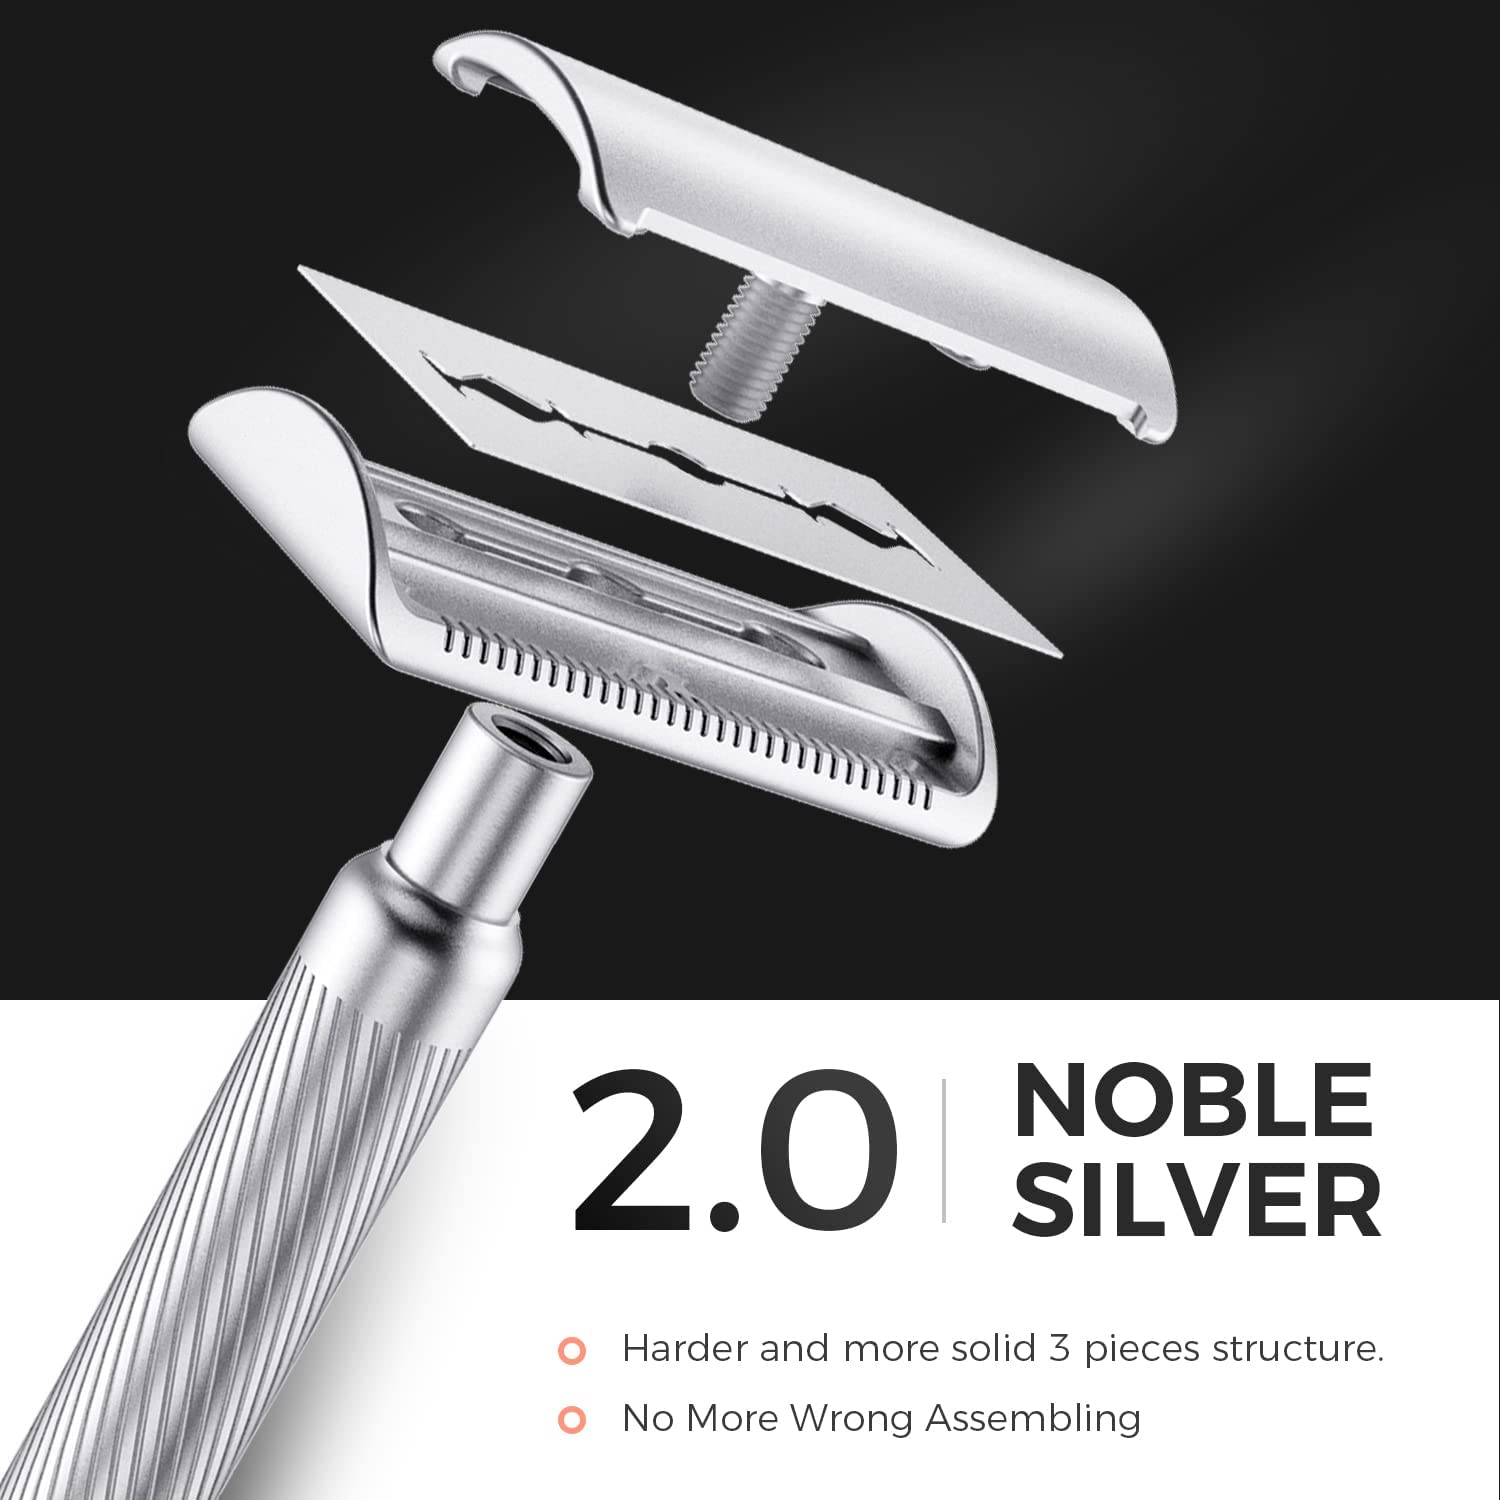 Noble silver double edge safety razor combination